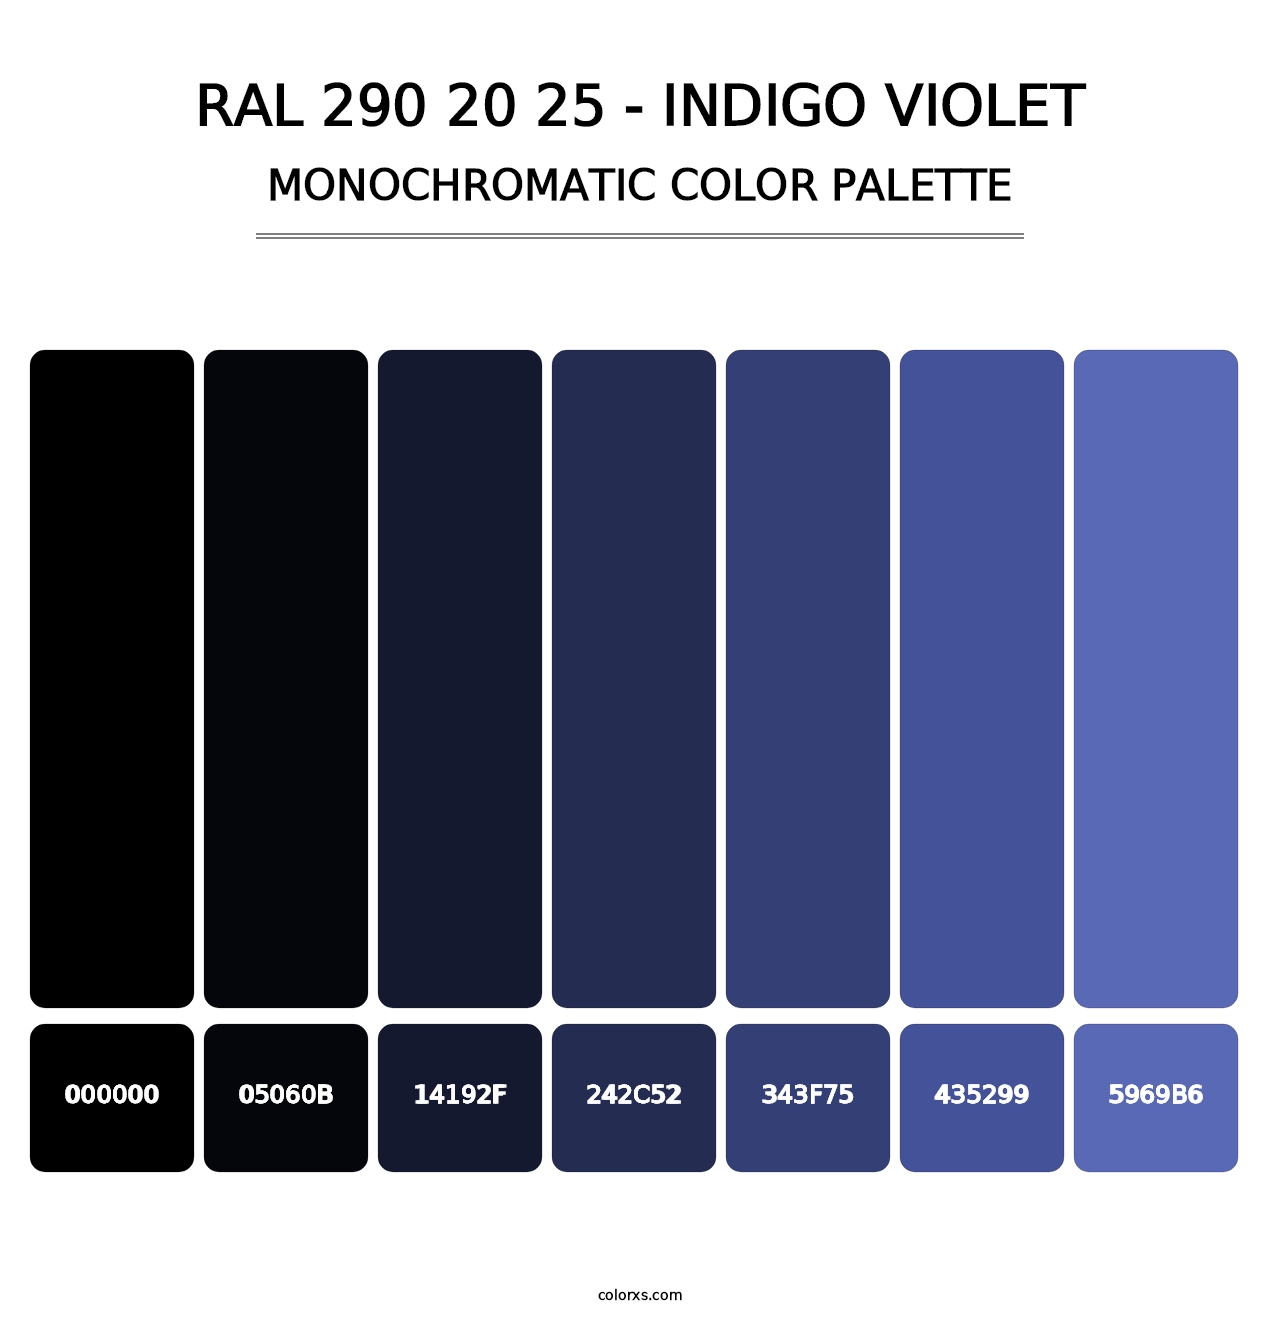 RAL 290 20 25 - Indigo Violet - Monochromatic Color Palette